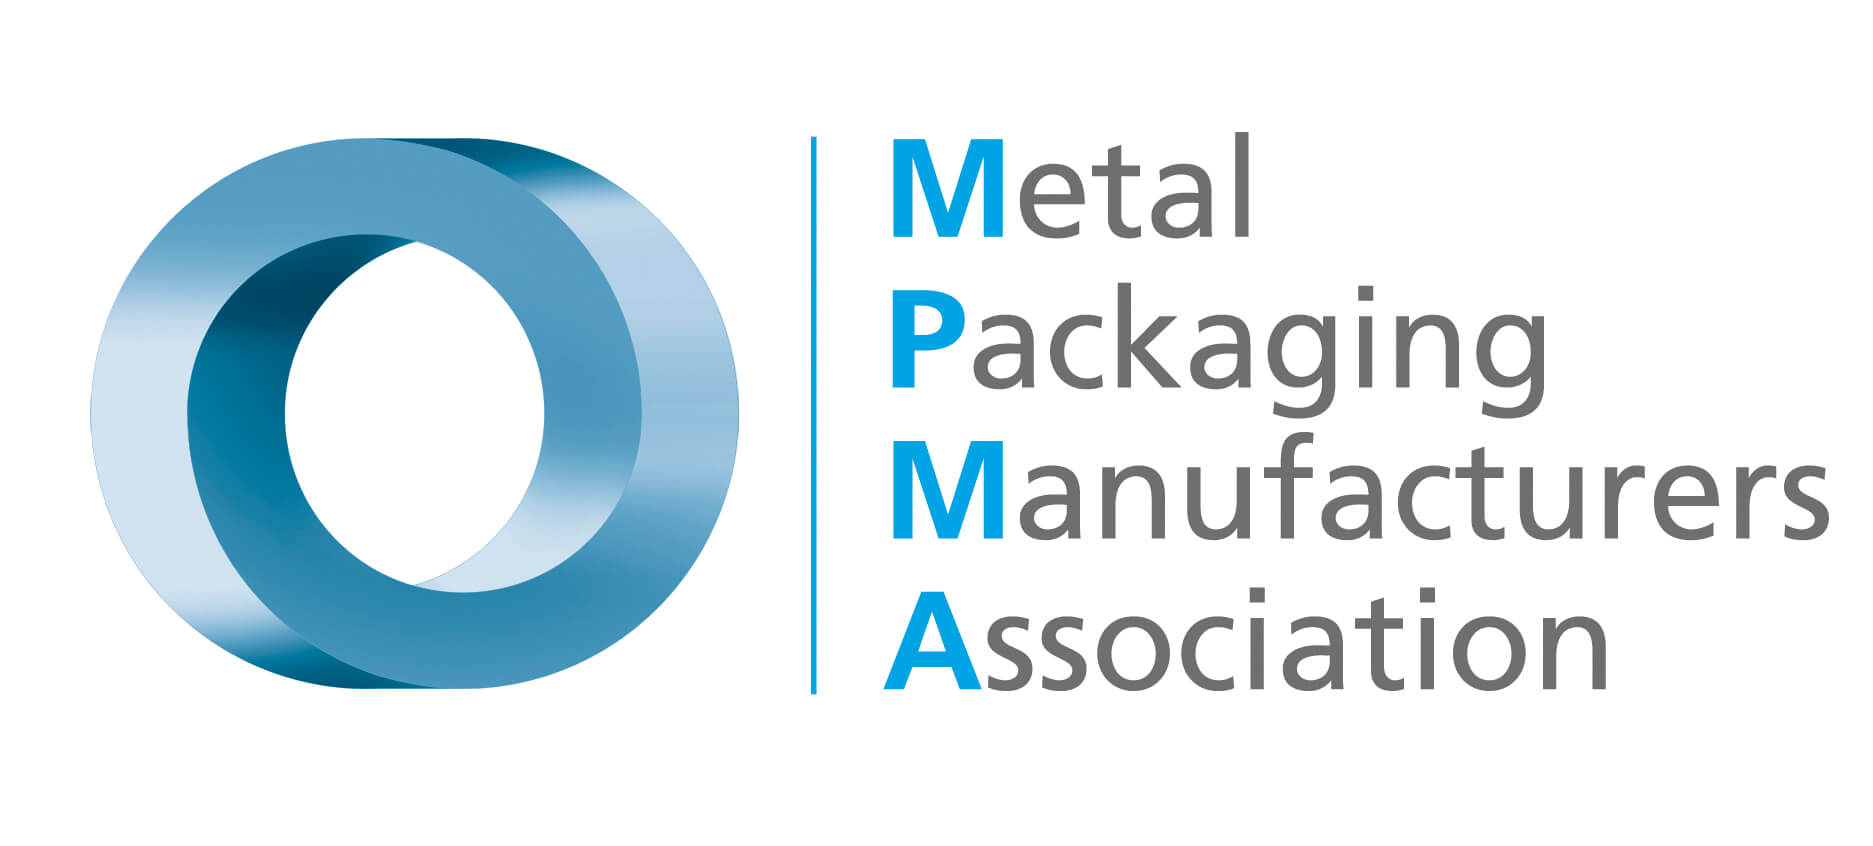 Metal Packaging Manufacturers Association logo